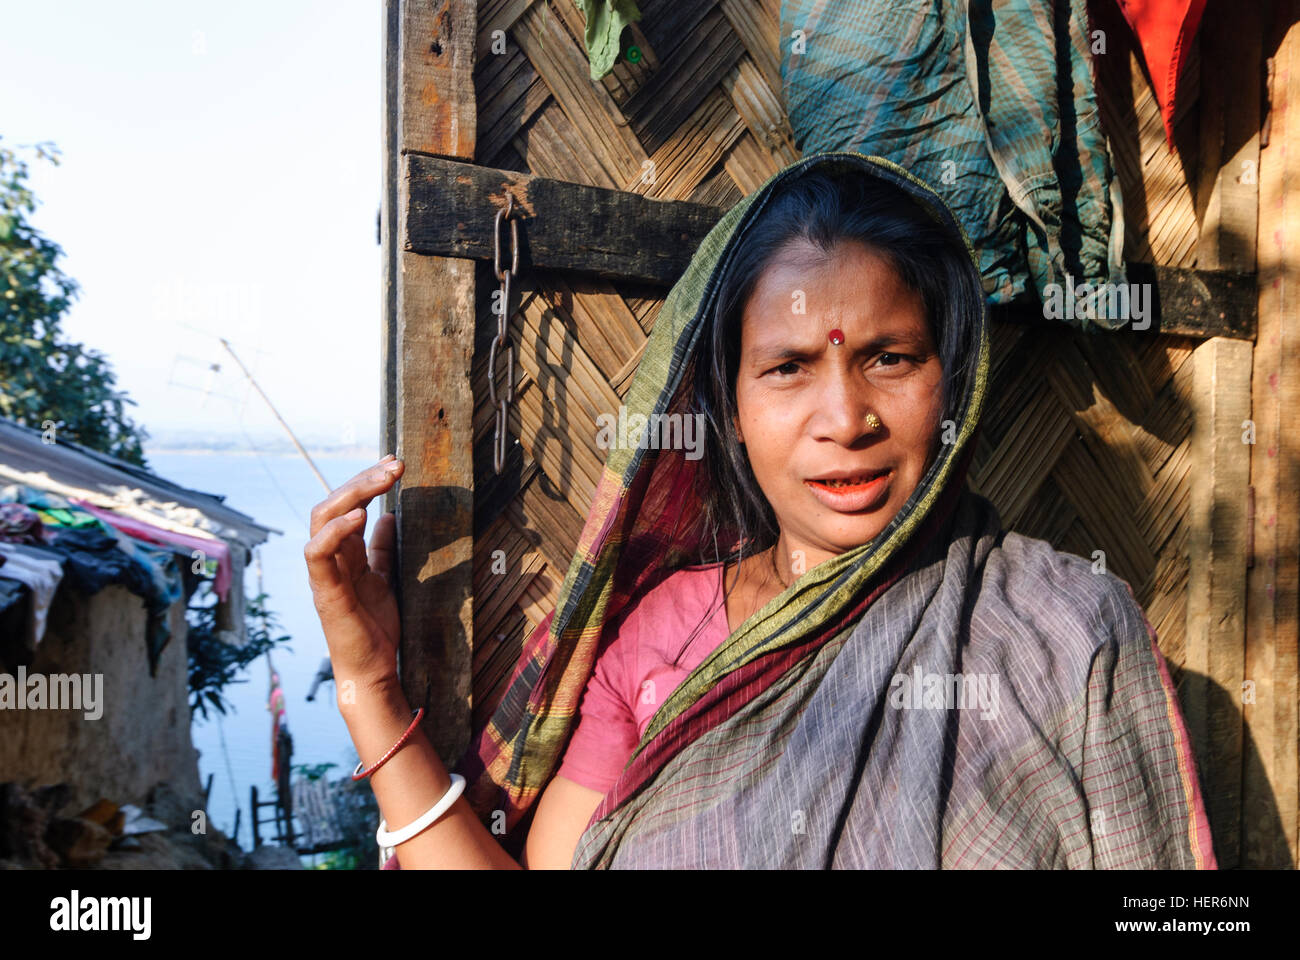 Rangamati: People of Tripura minority on an island in Kaptai Lake, Chittagong Division, Bangladesh Stock Photo